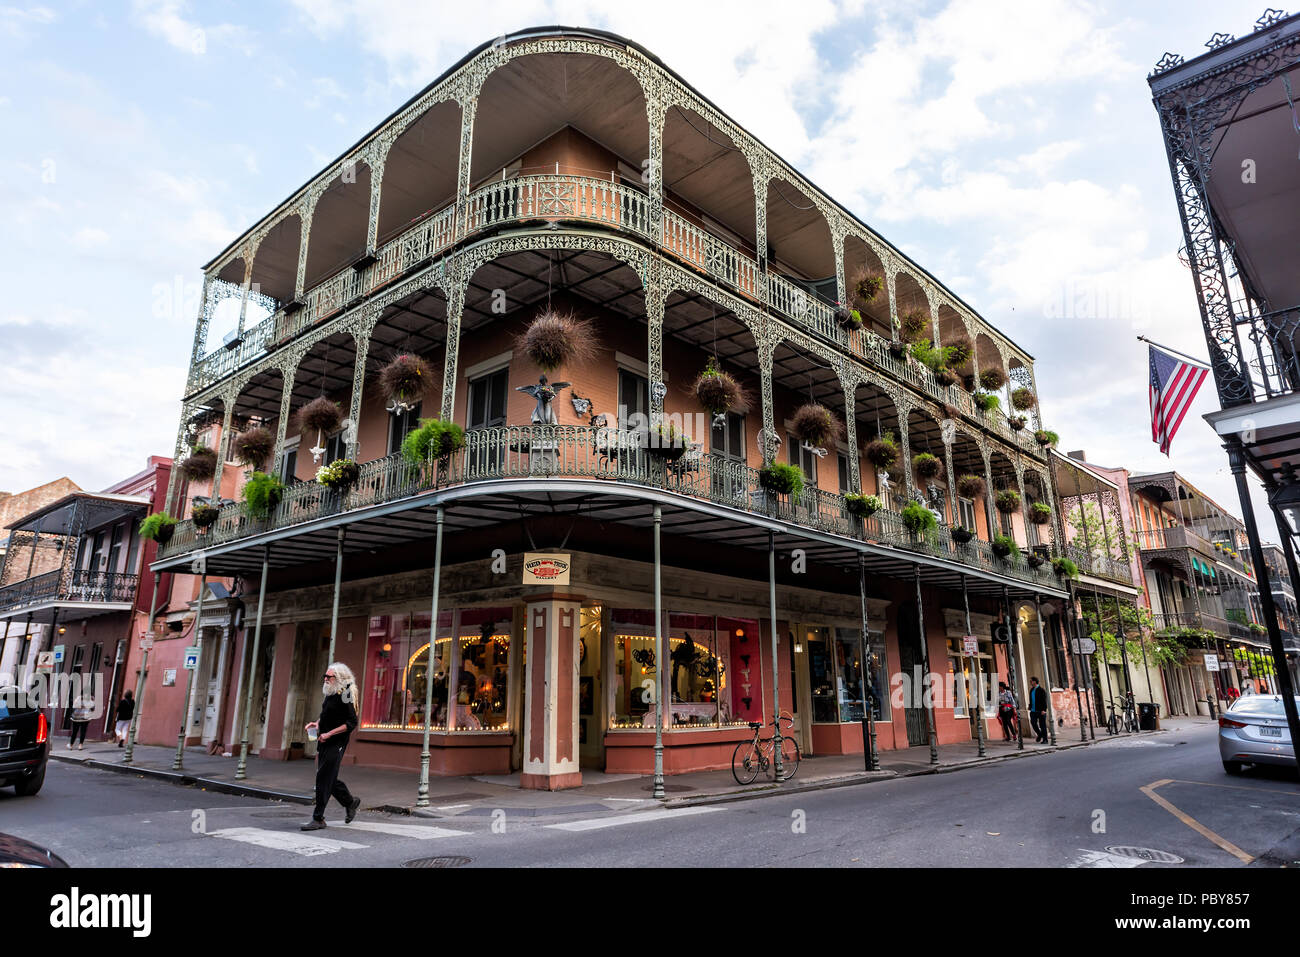 New Orleans, USA - 23. April 2018: Altstadt Bourbon Street in Louisiana berühmten Stadt, Stadt, Gusseisen balkon Wand, Ecke, Gebäude, Menschen zu Fuß duri Stockfoto